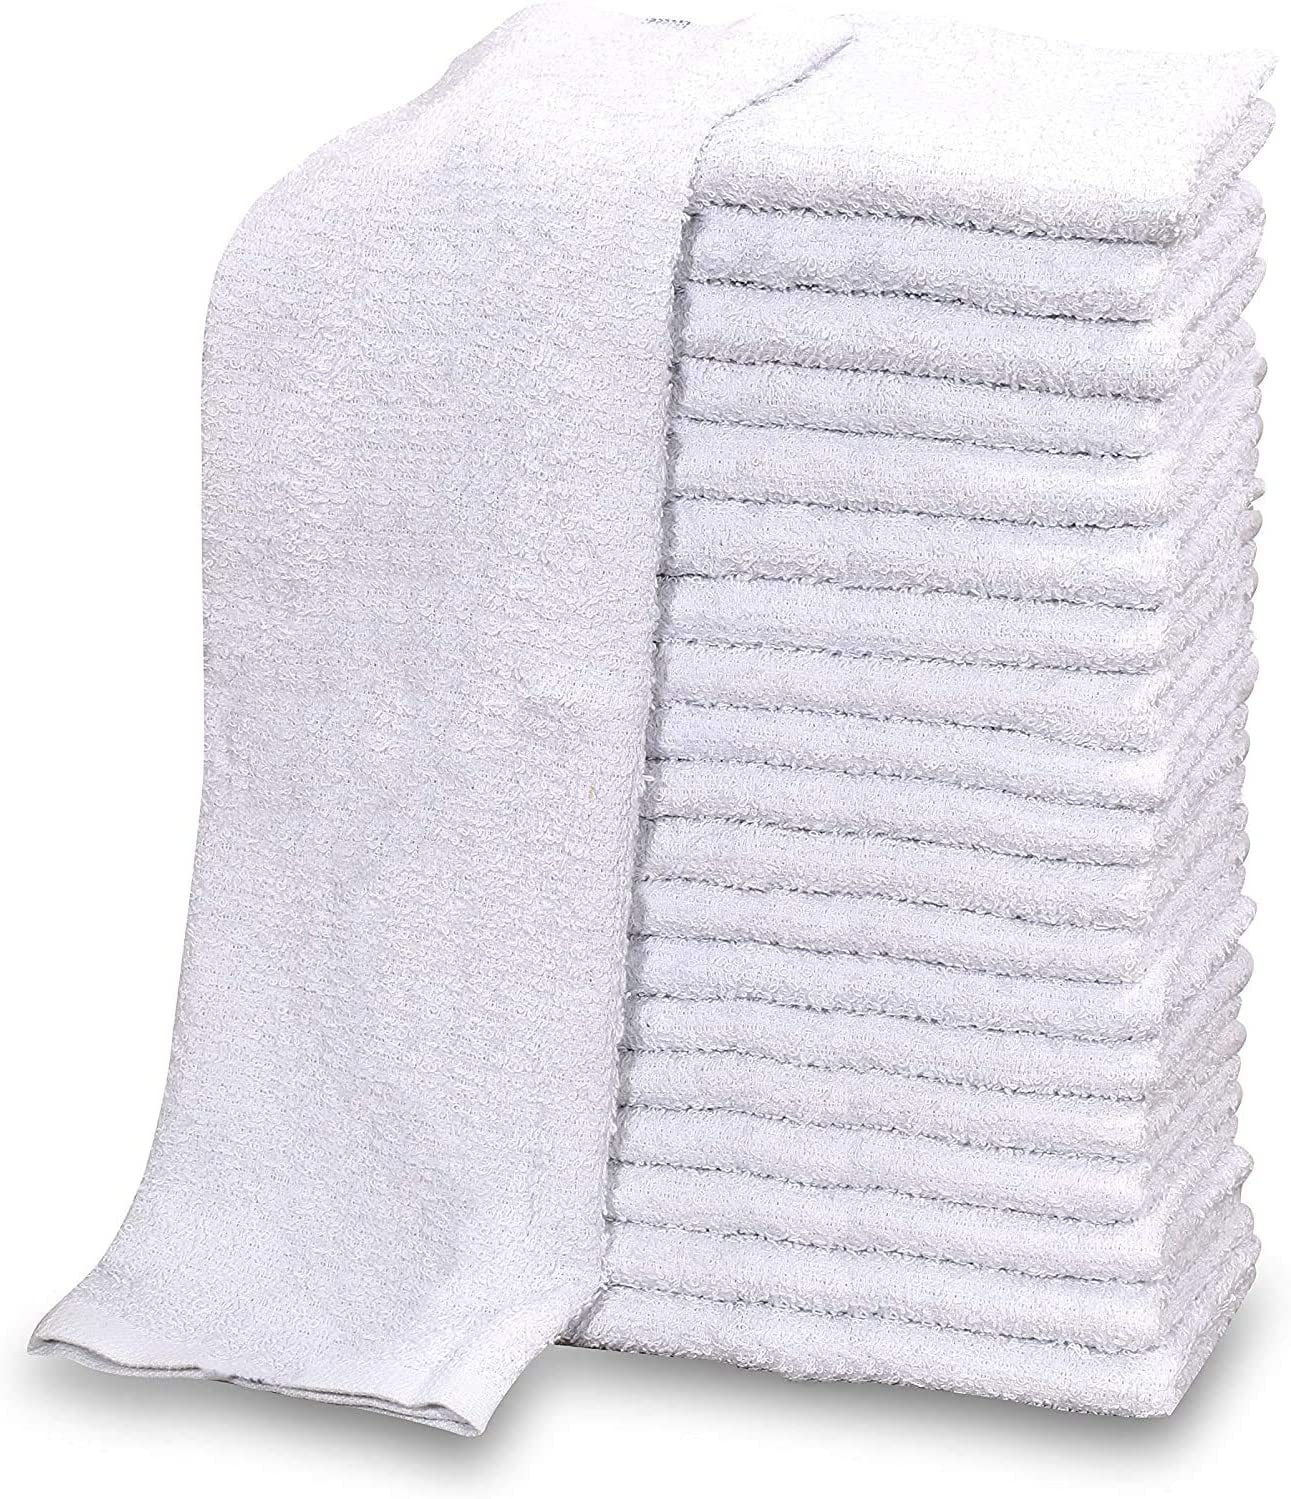 Linteum Textile, 24 Pack, White Bar Mops Kitchen Towels, 100% Terry Cotton